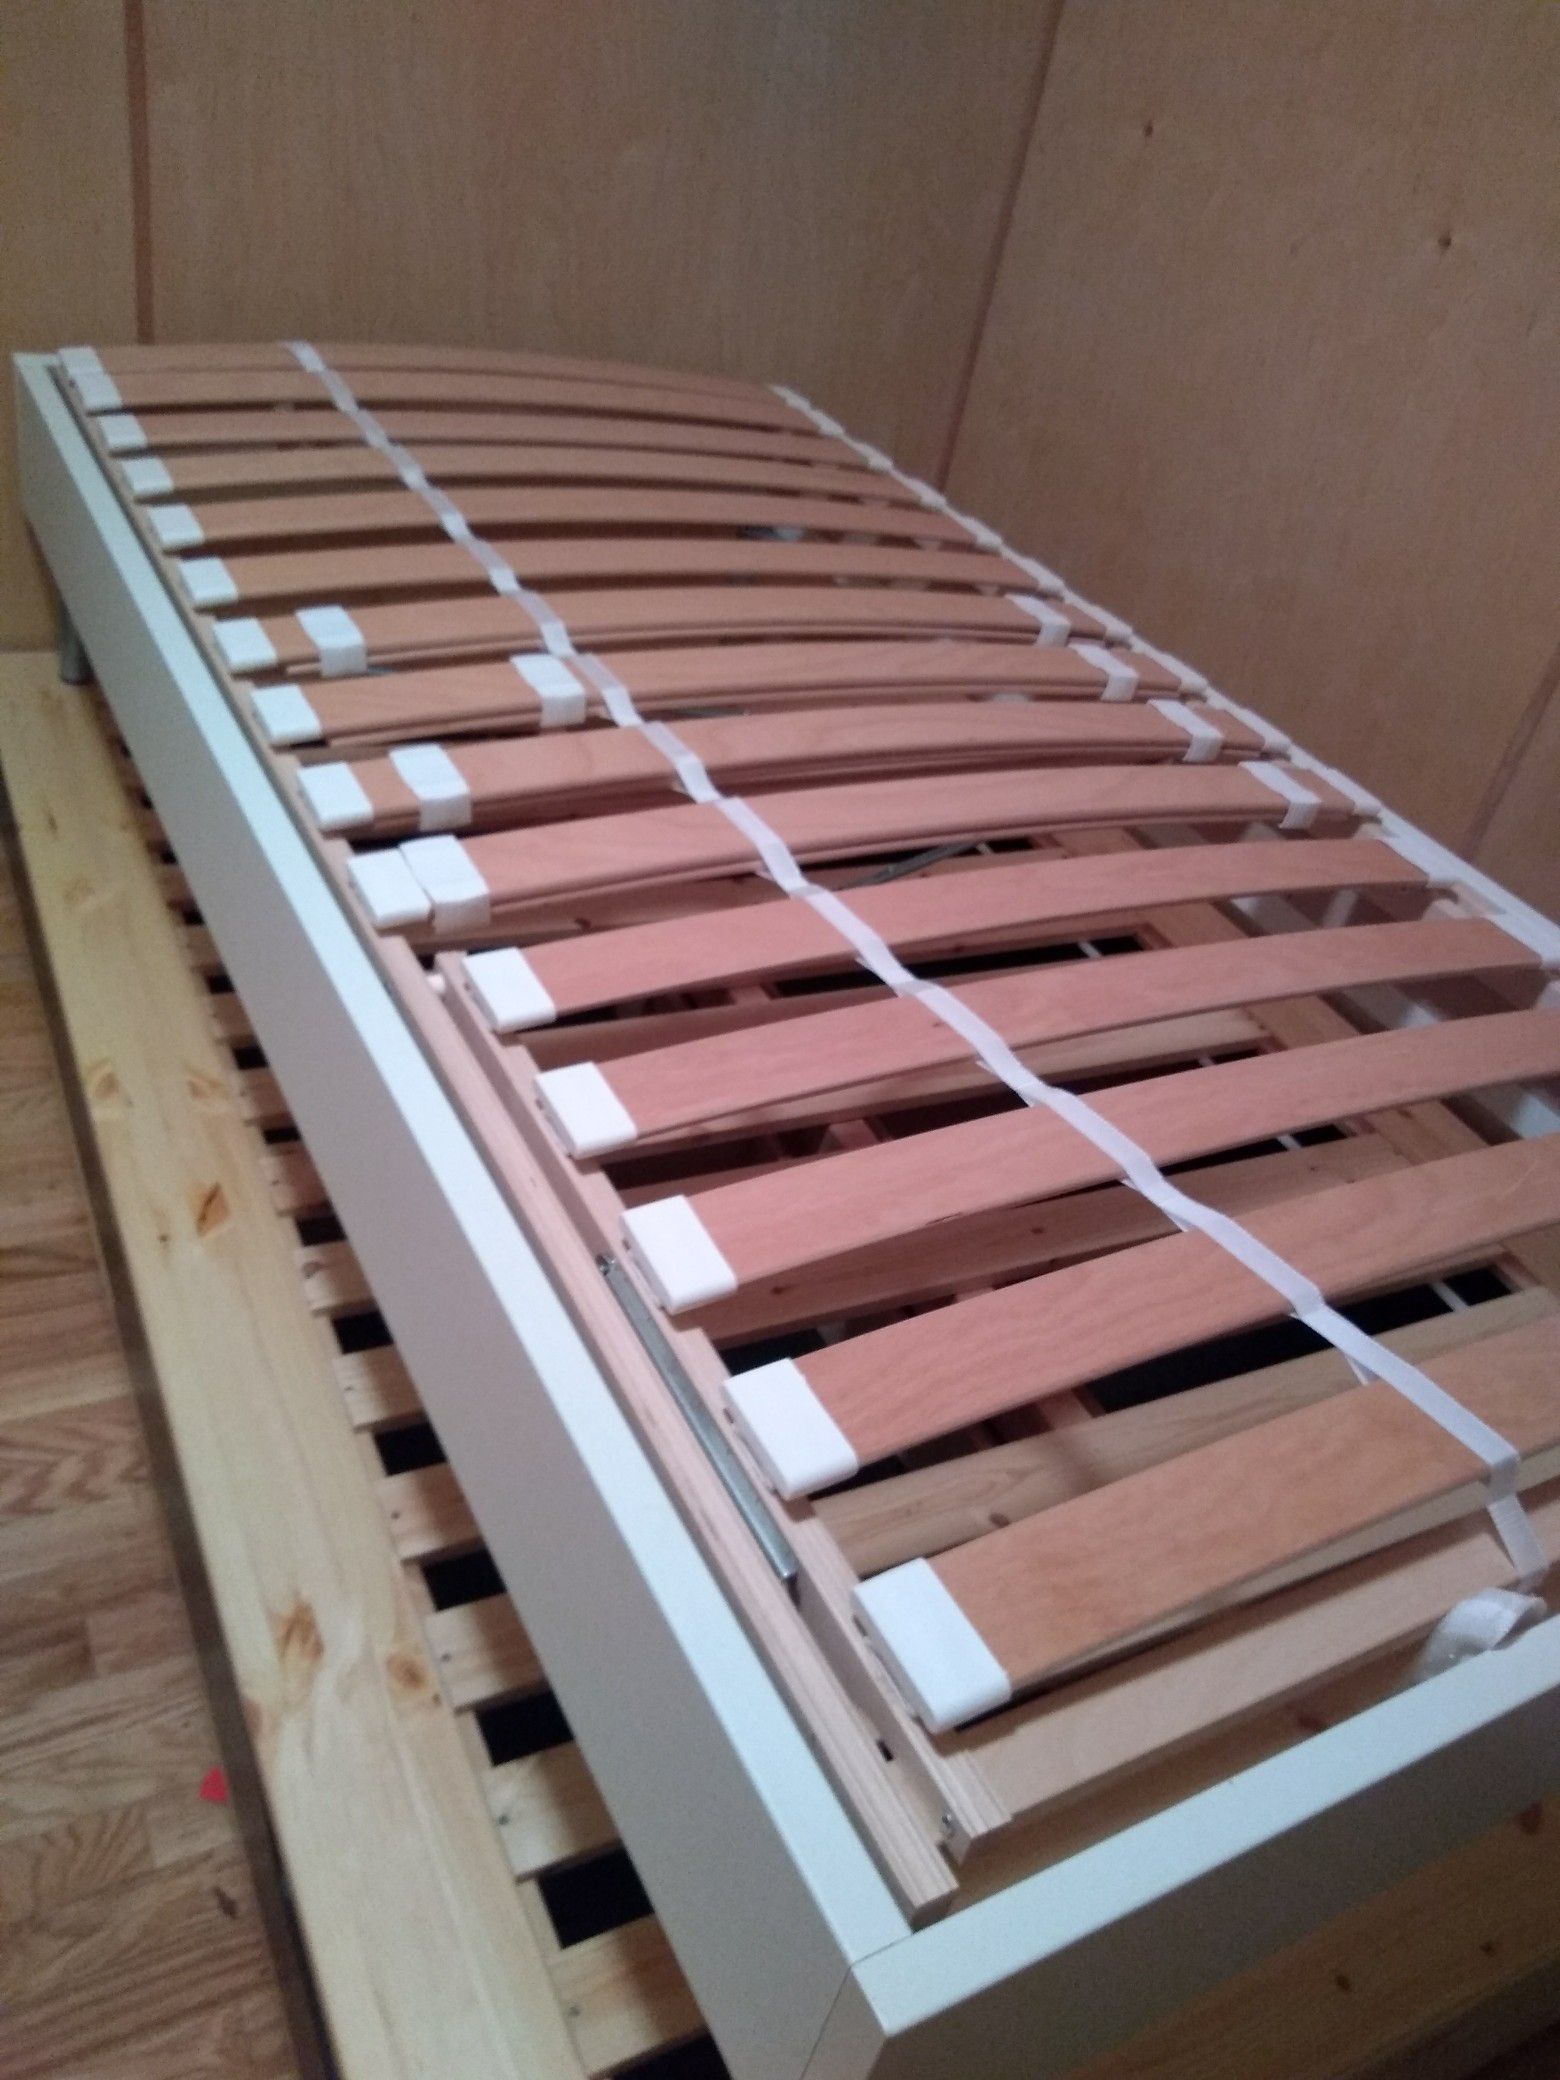 Ikea white adjustable twin mattress/bed frame